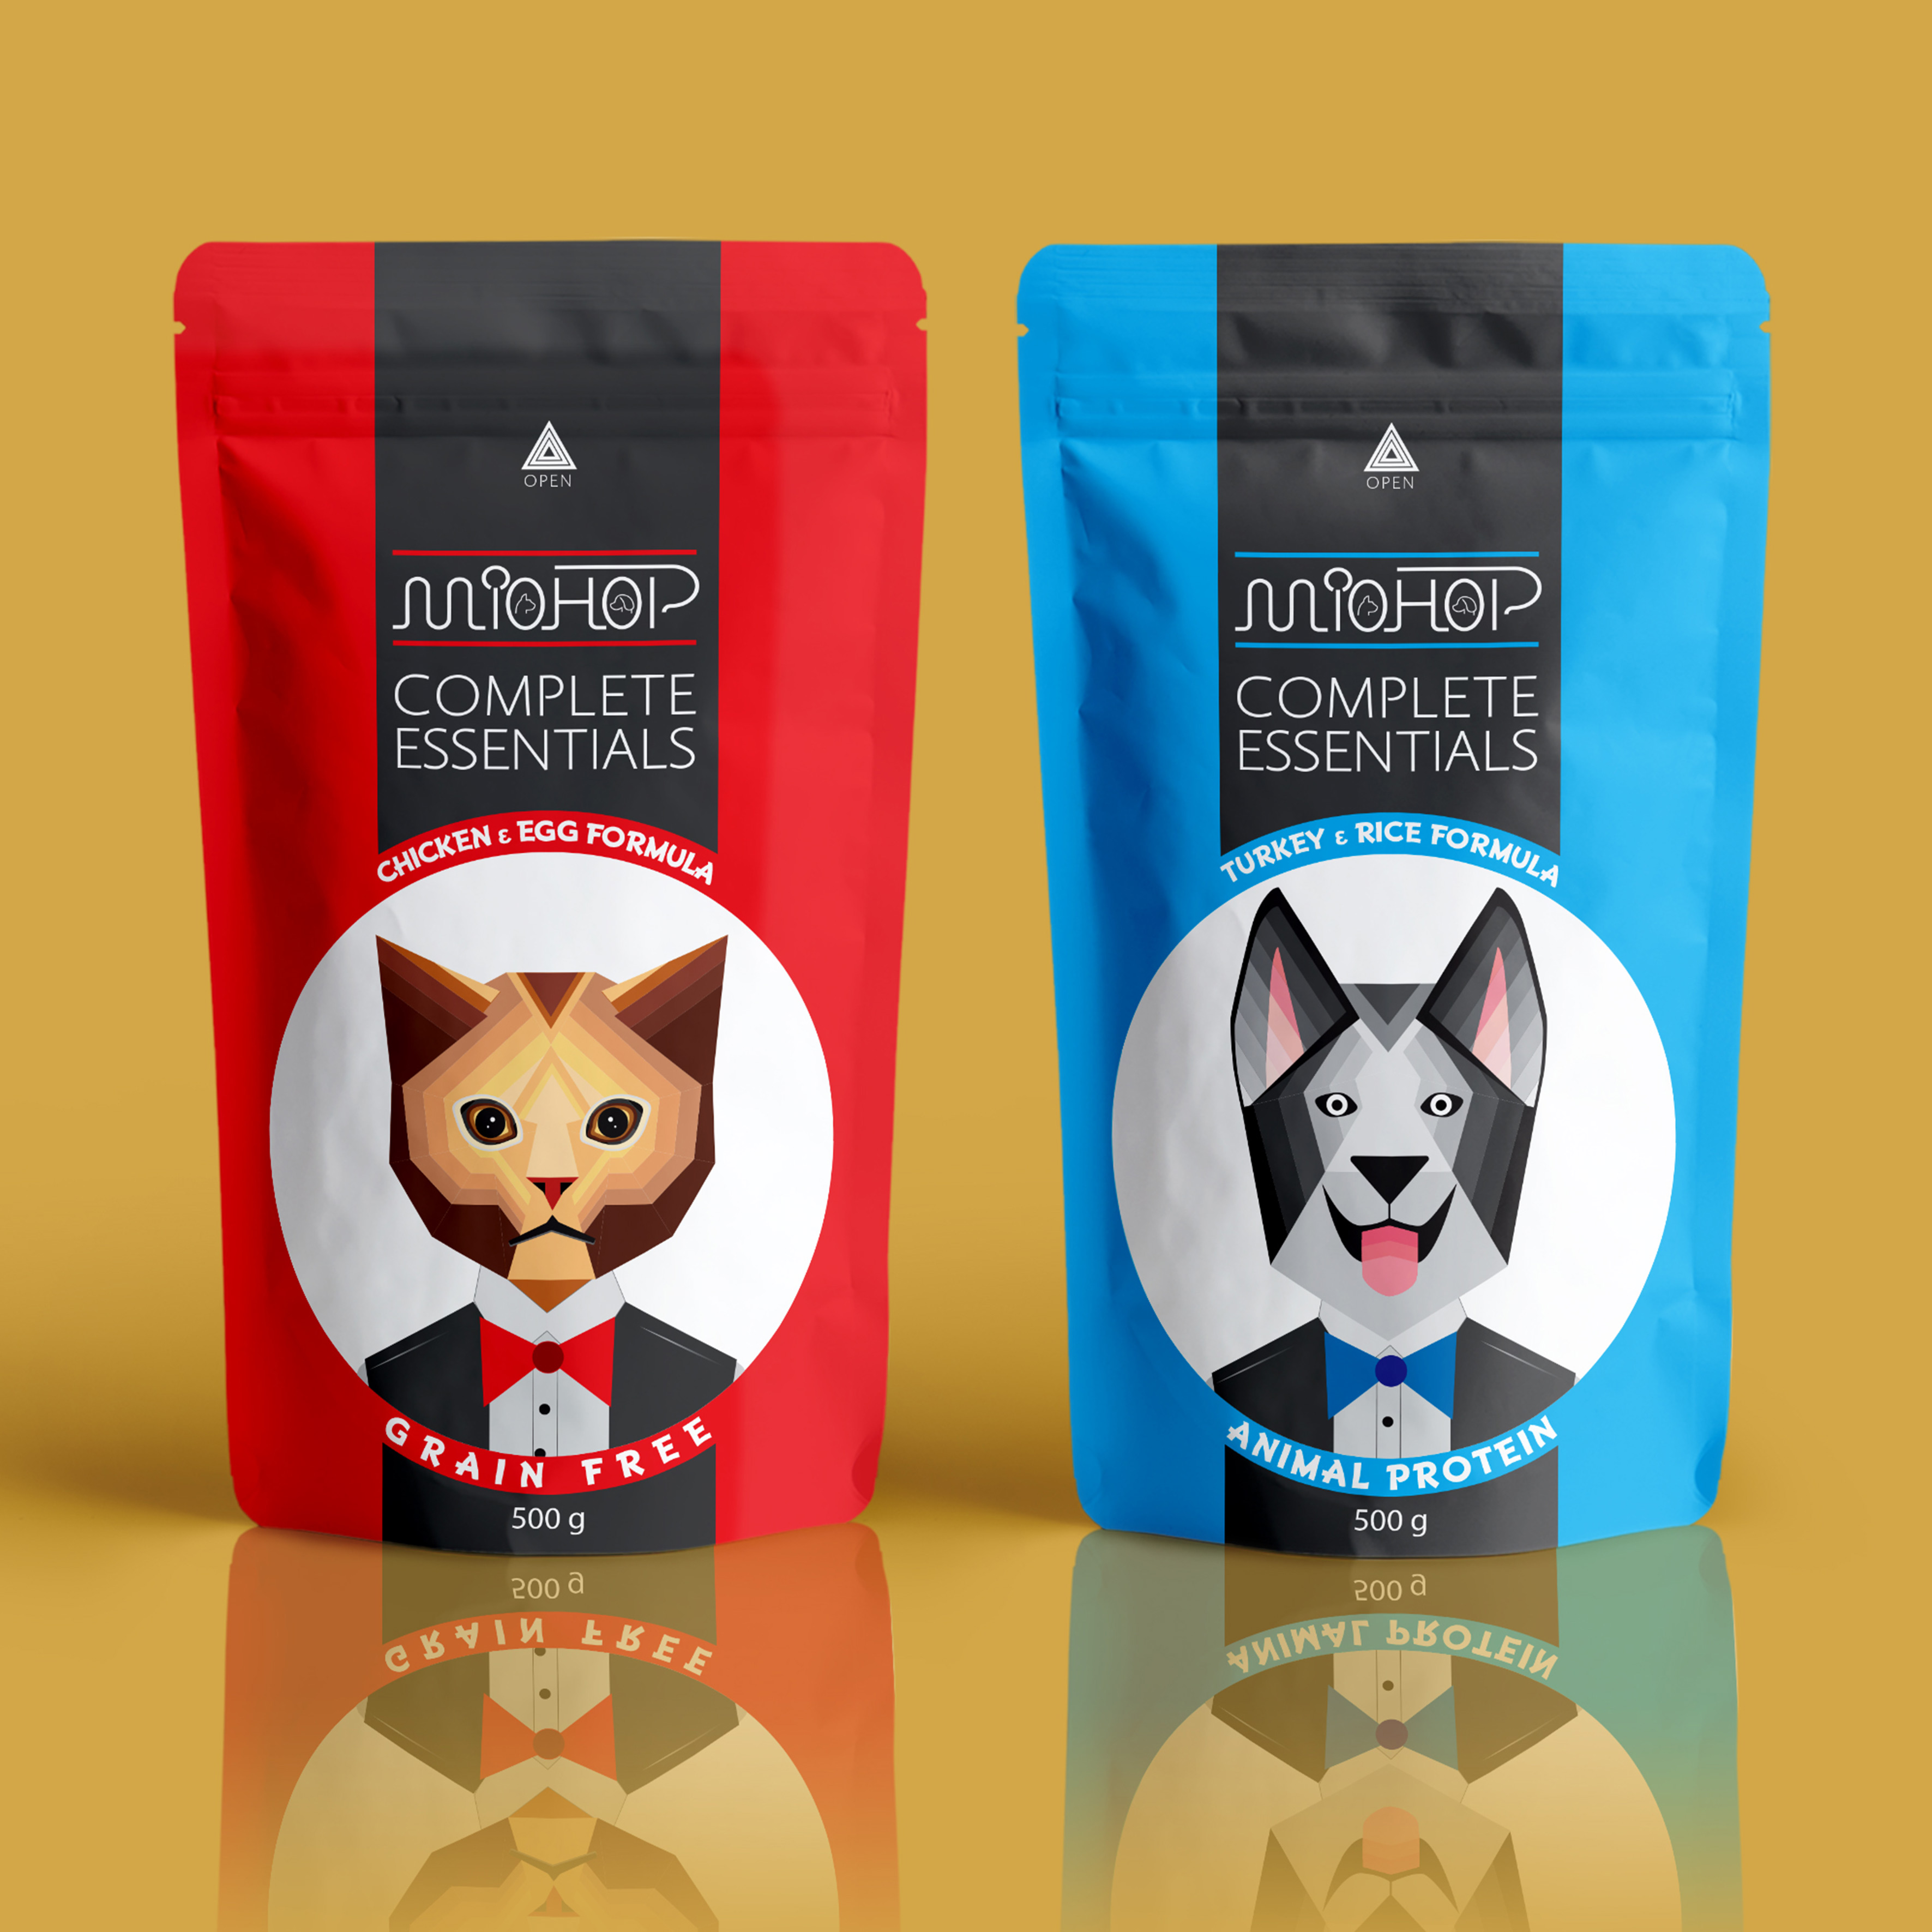 MioHop Dry Pet Food Packaging Design